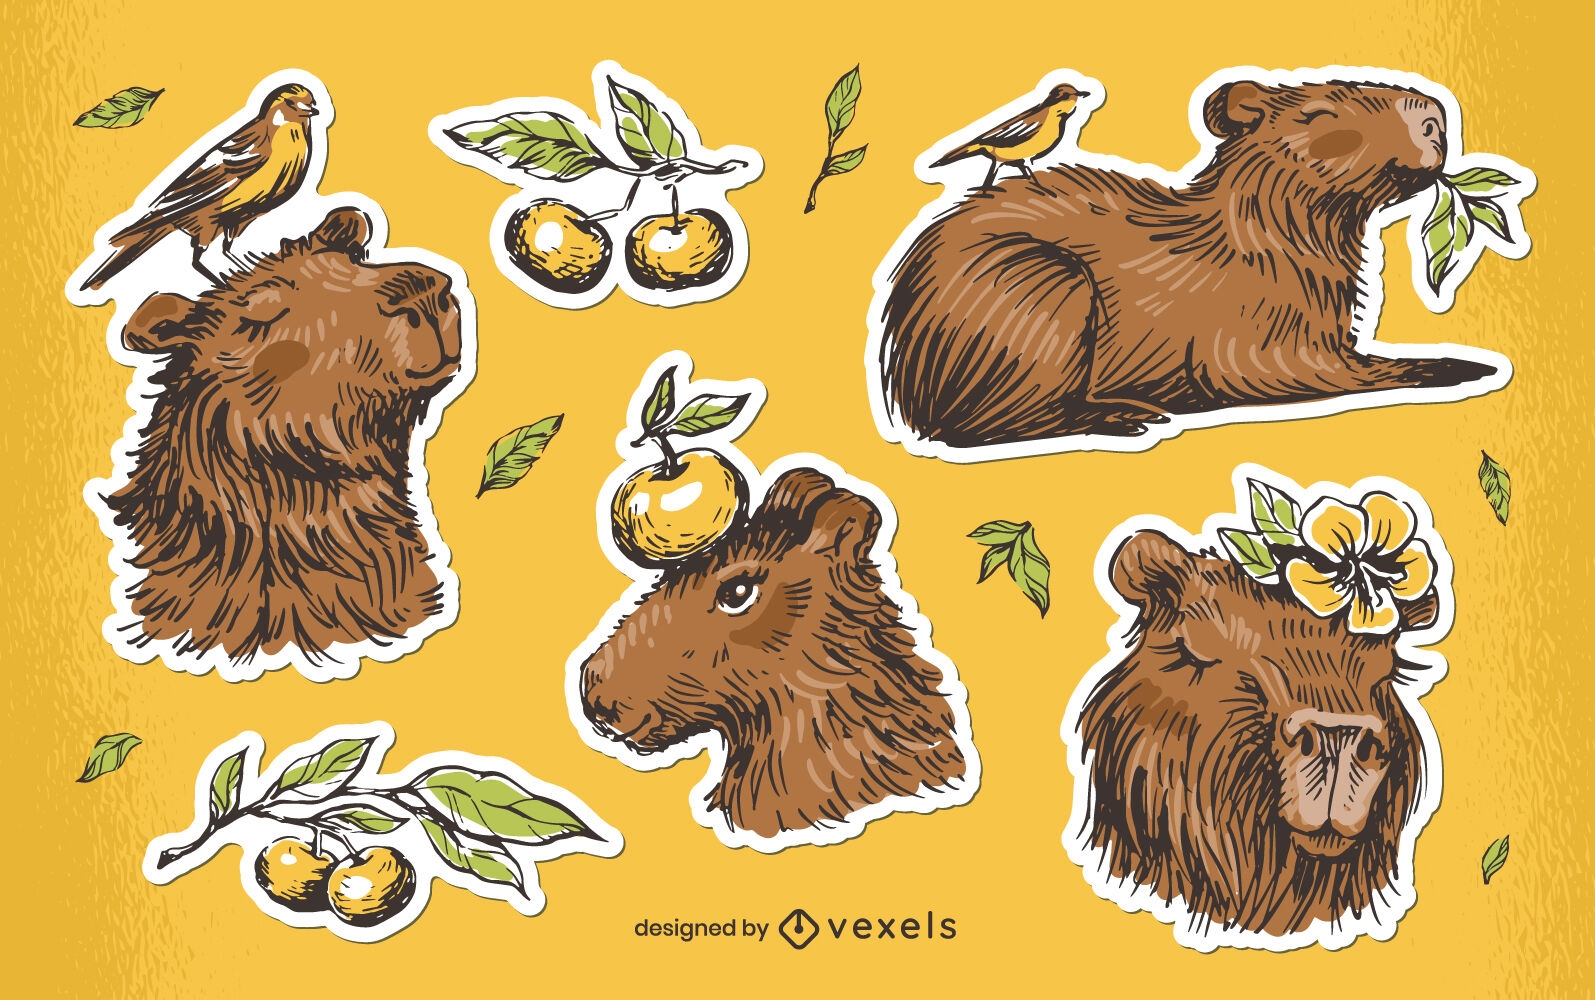 Capybara Art Print  Capivara, Capivara desenho, Fotos de capivara